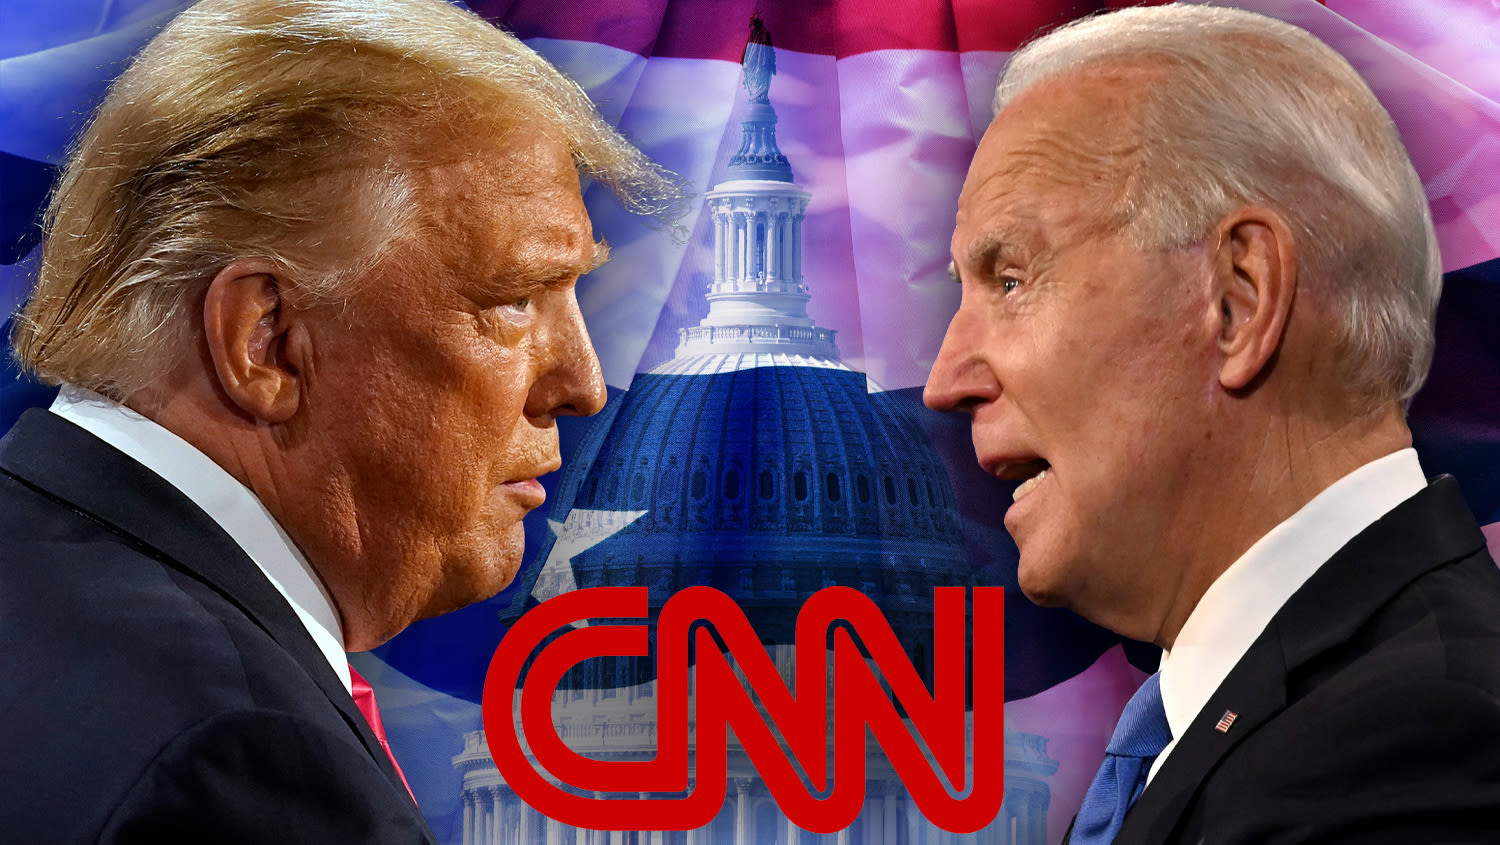 ...CNN’s Biden-Trump Debate Puts Added Pressure On Moderators Jake Tapper And Dana Bash To Meet The Moment